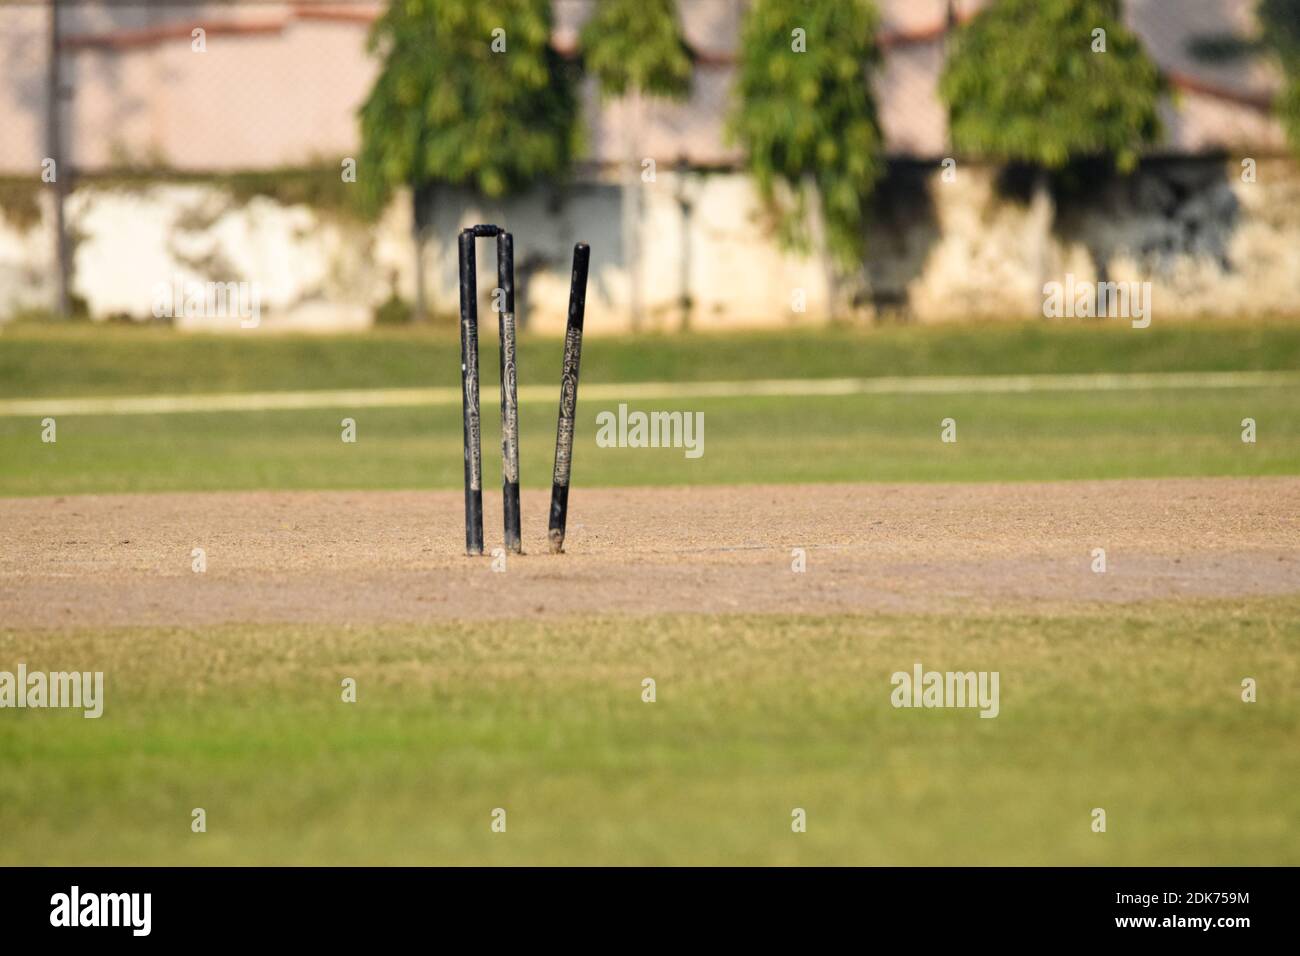 Bowled - Cricket Stumps Broken Stock Photo